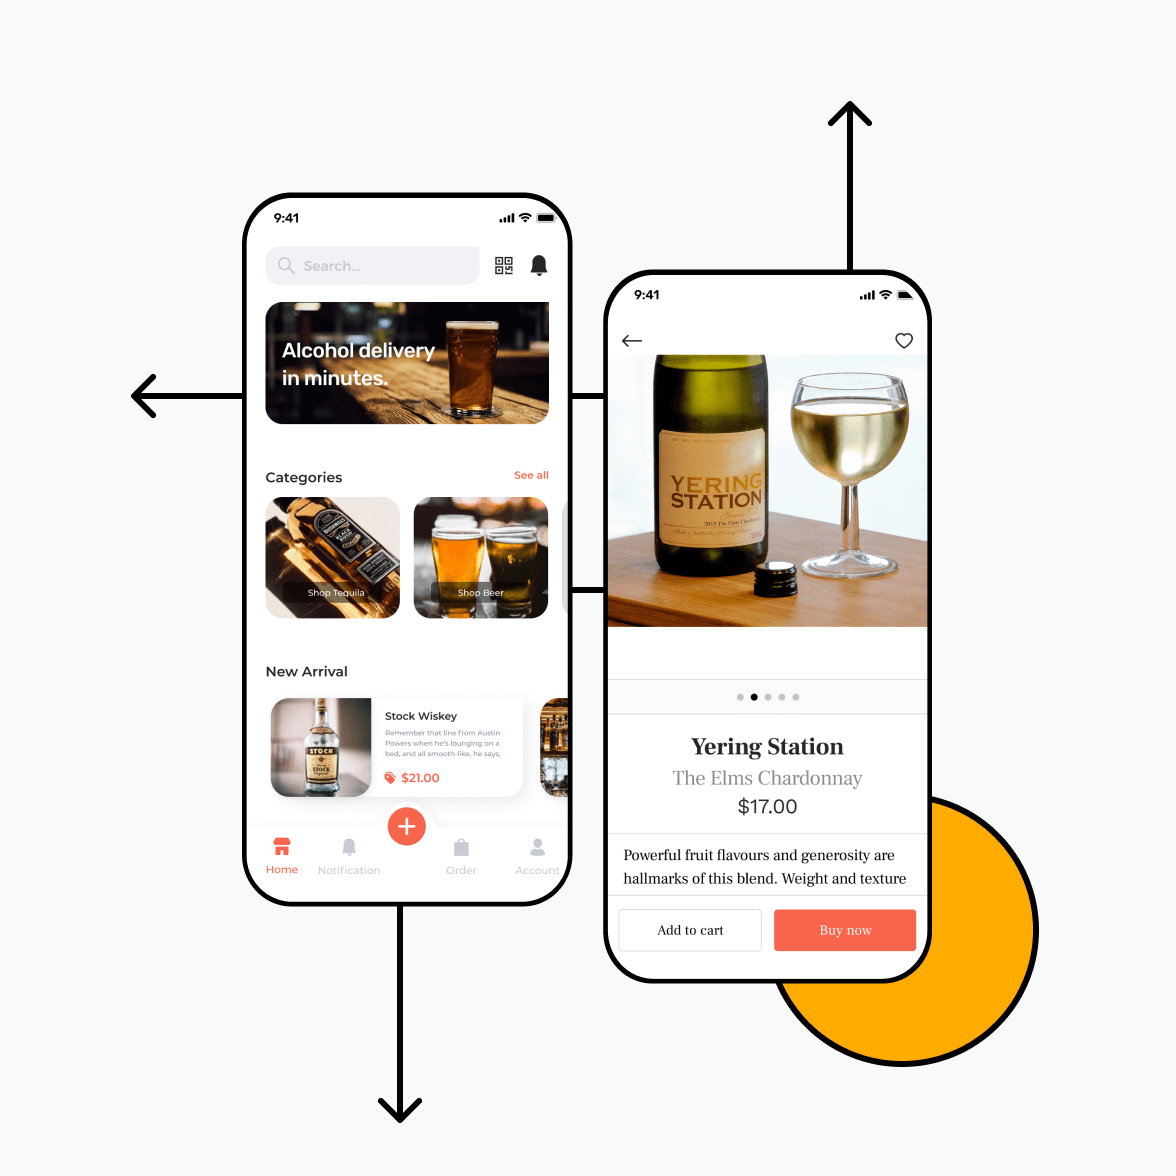 Liquor delivery app screens product details